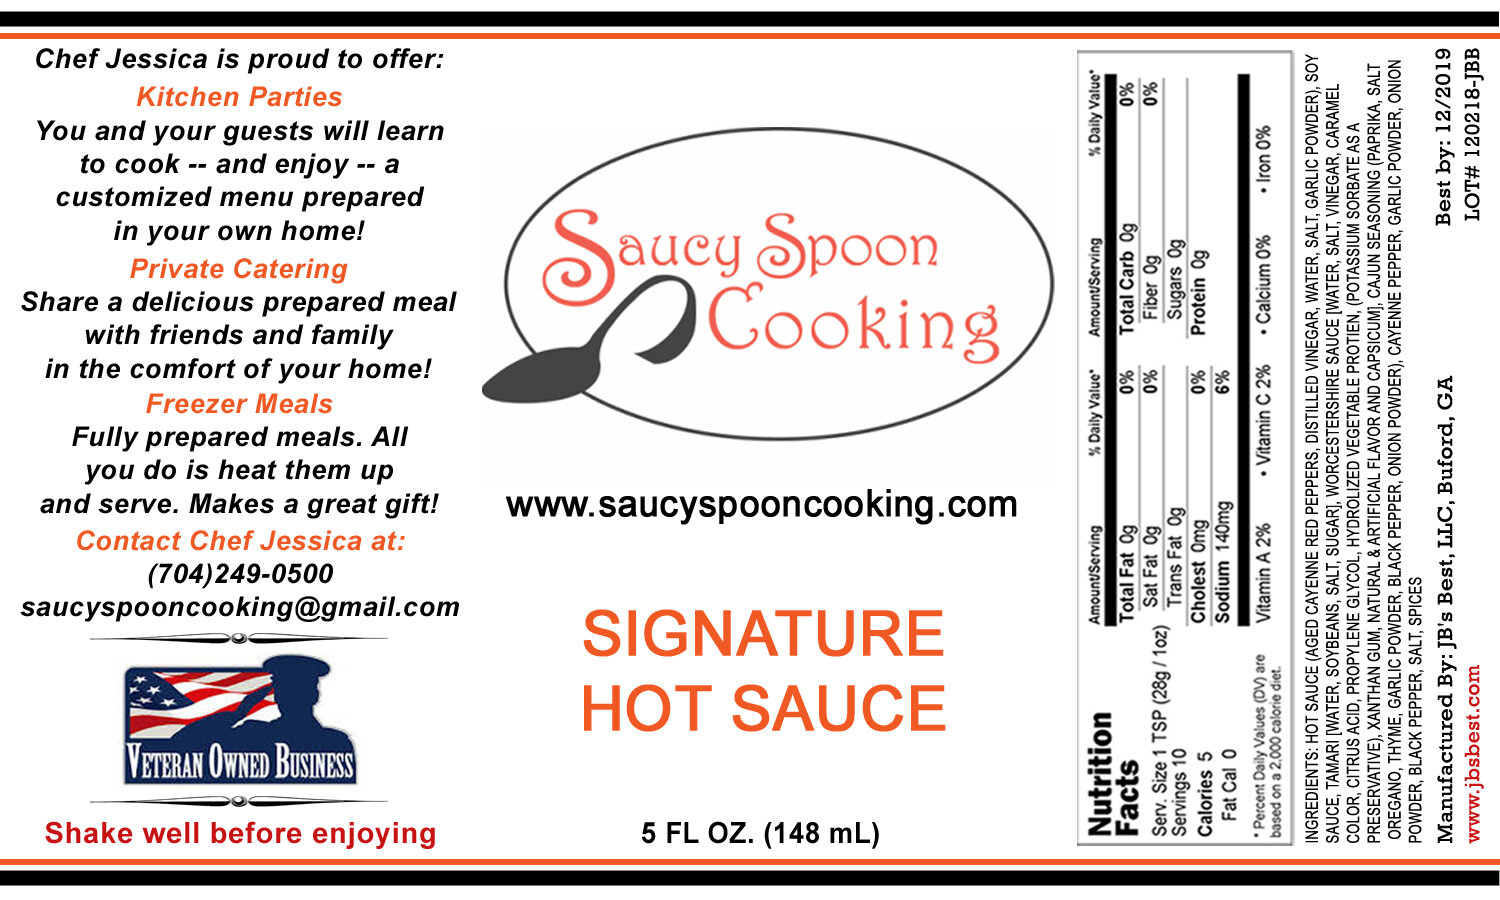 Saucy-Spoon-Cooking-3x5.jpg